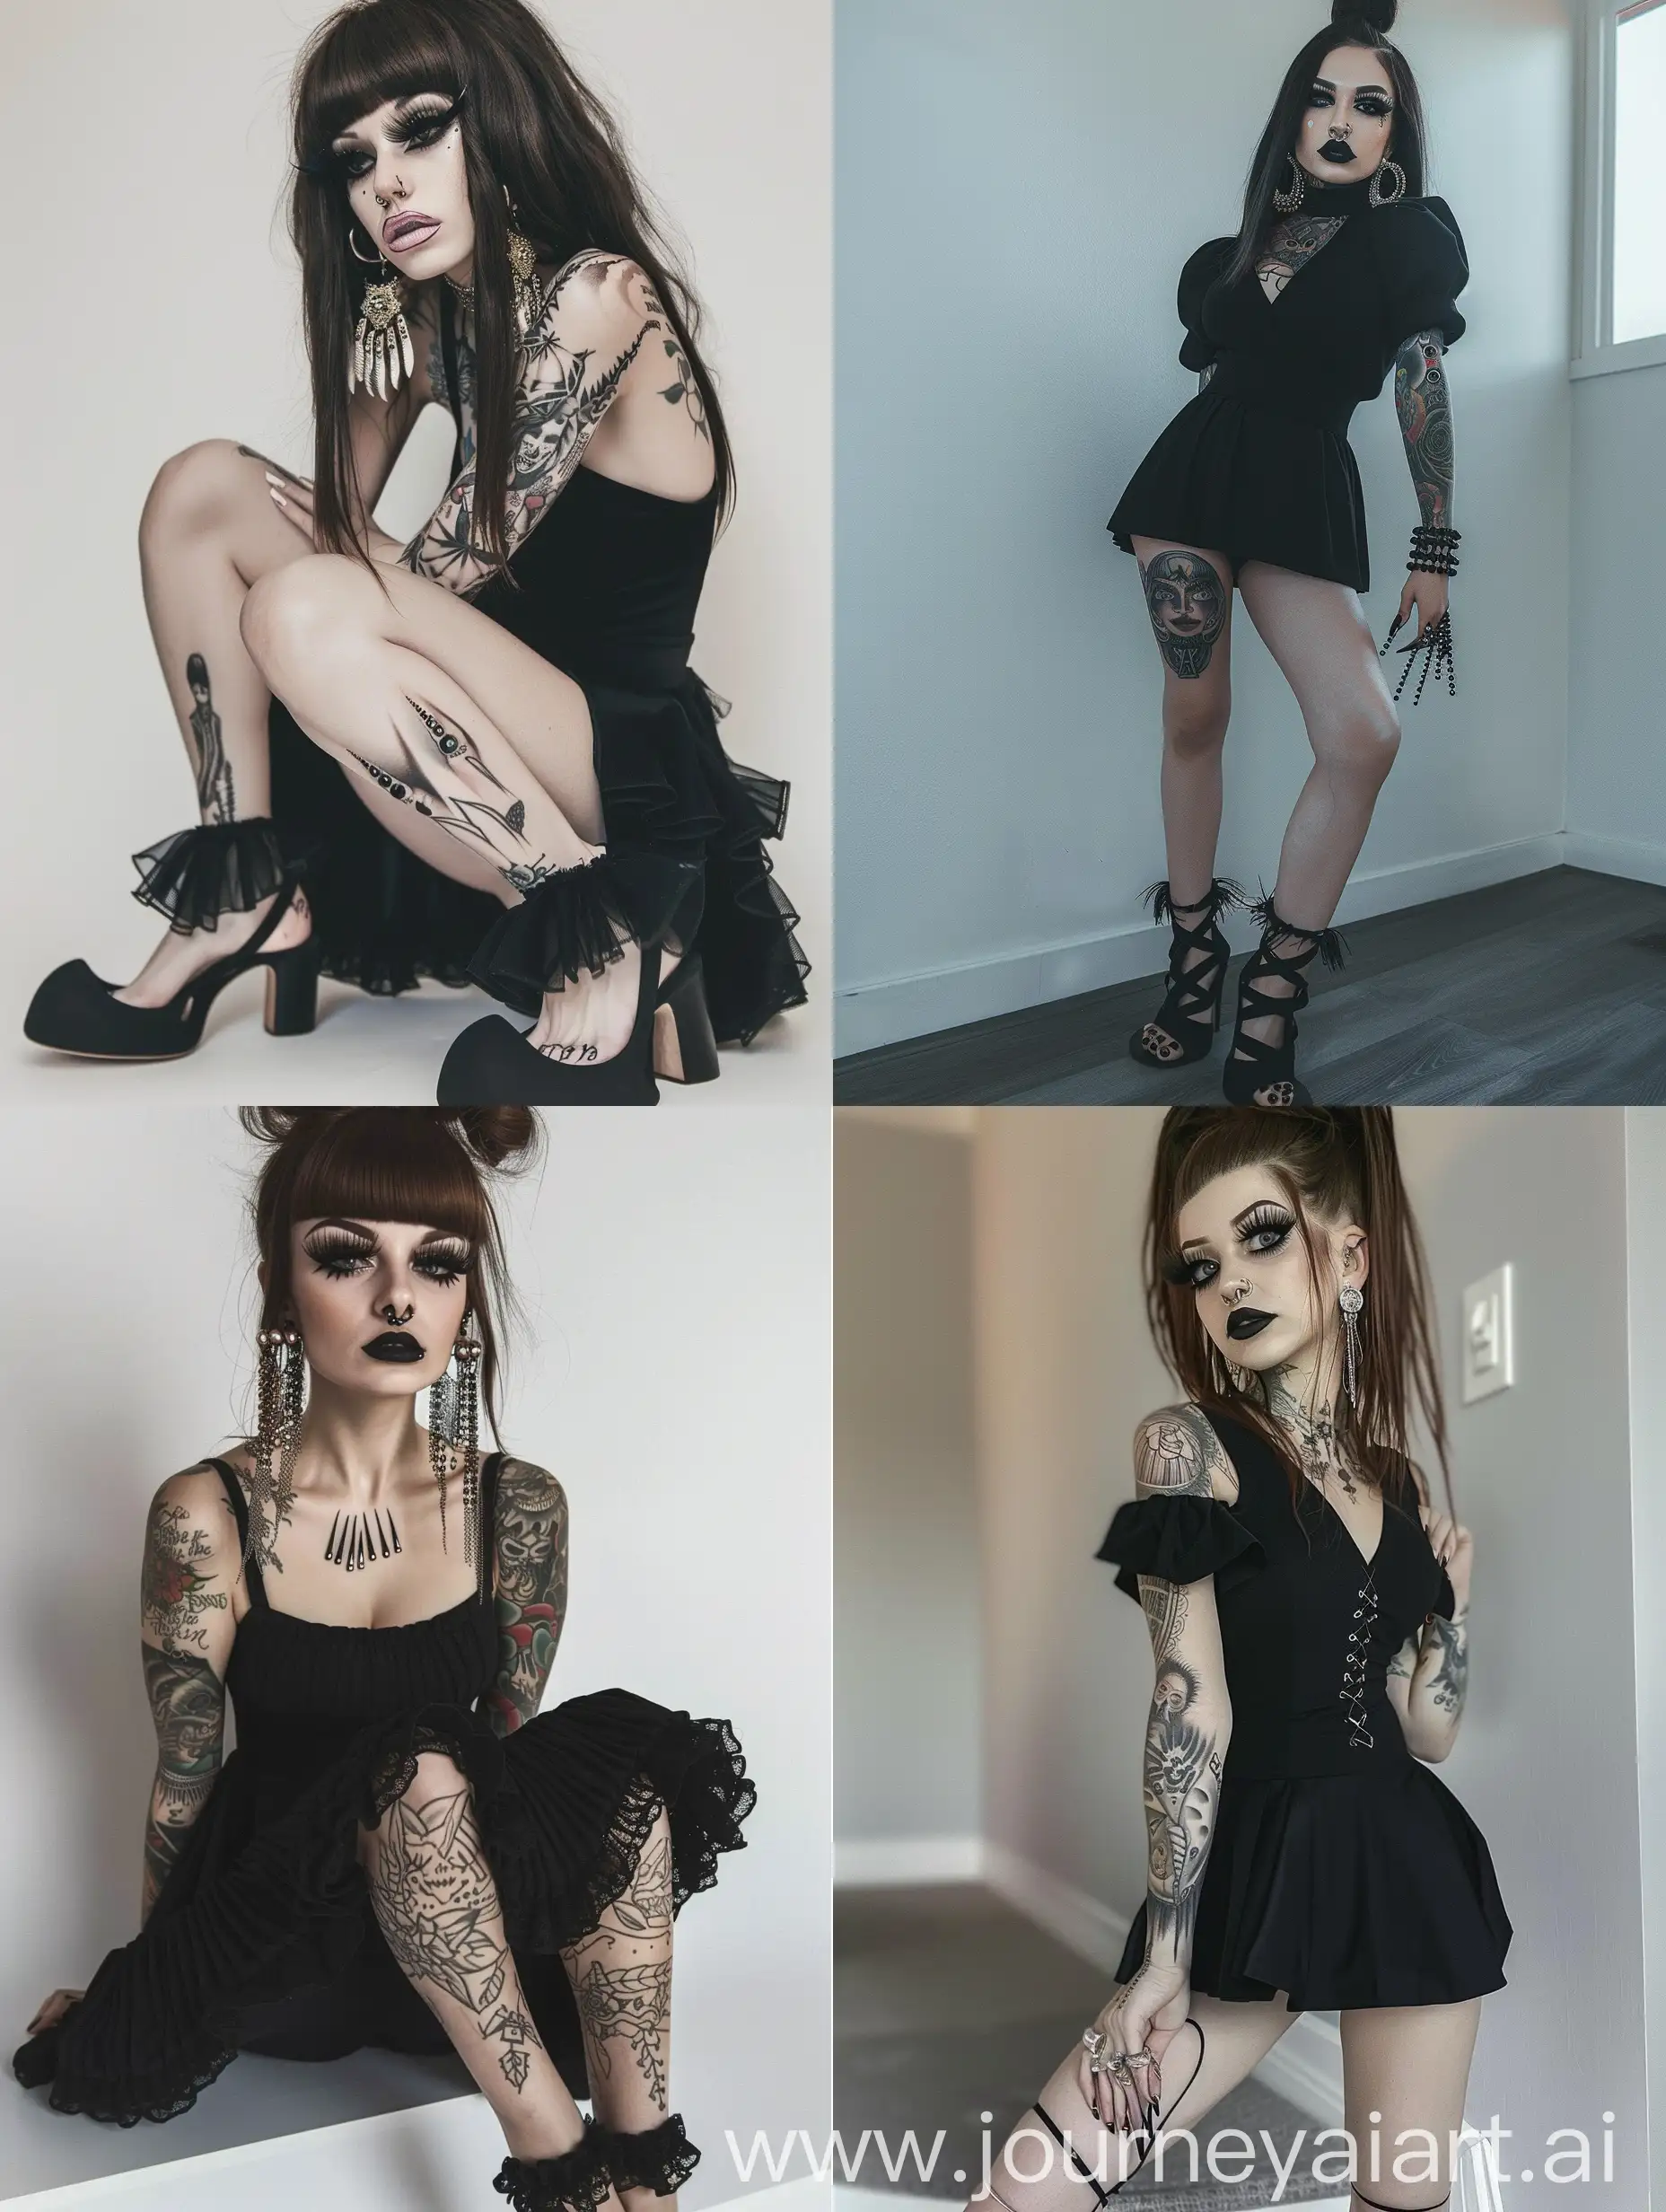 Cute girl, beautiful girl, (Goth girl with extremely long eyelashes), tattoos, fullbody photo, black dress, platform heels, european girl, huge earrings, gigantic nails